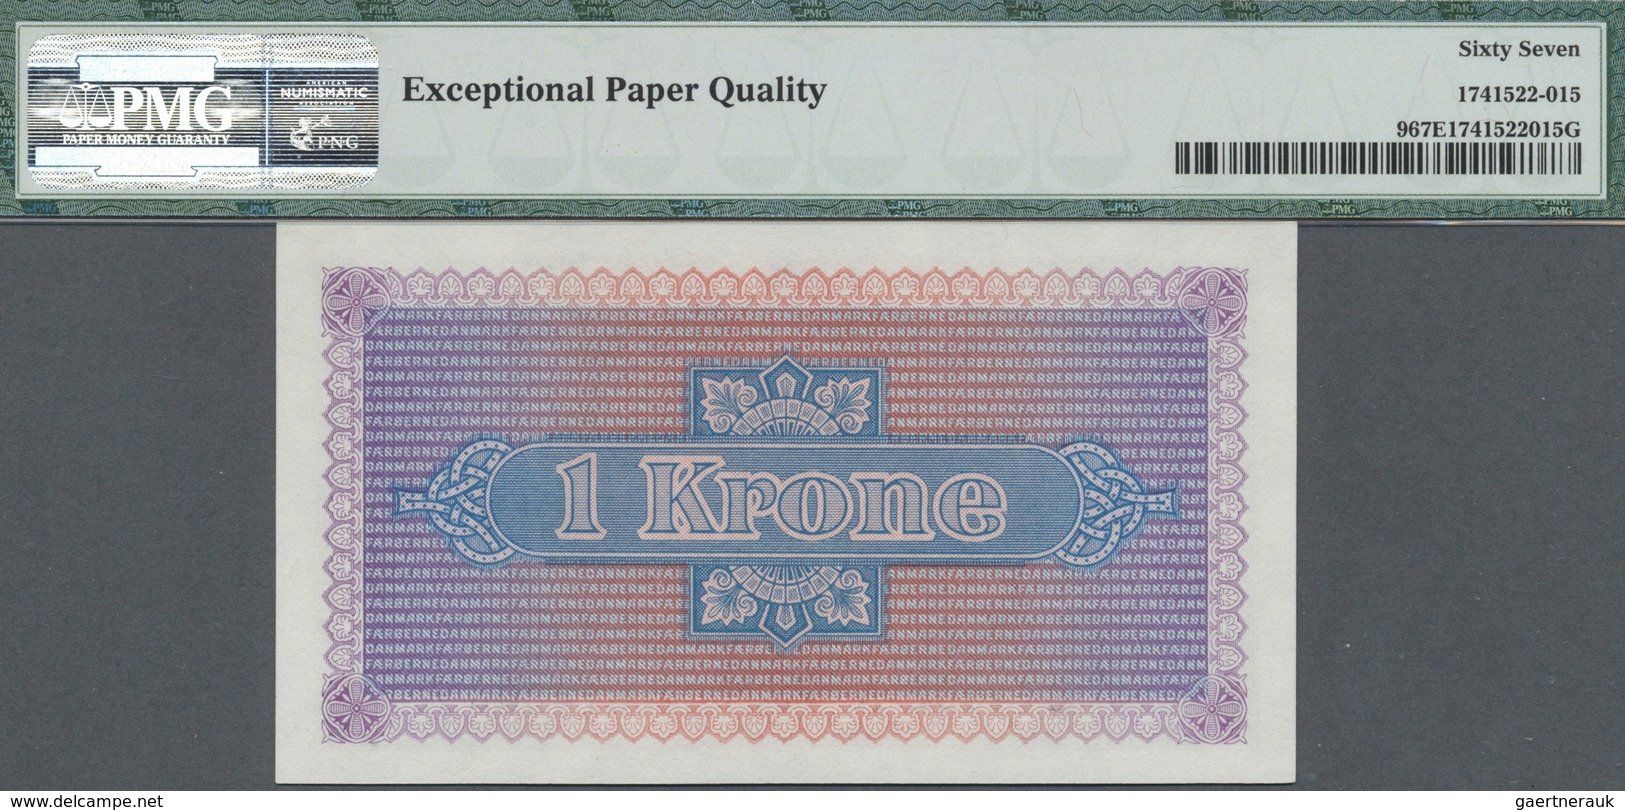 Faeroe Islands / Färöer: 1 Krone 1940, P.9 In Perfect UNC Condition, PMG Graded 67 Superb Gem Unc EP - Faroe Islands